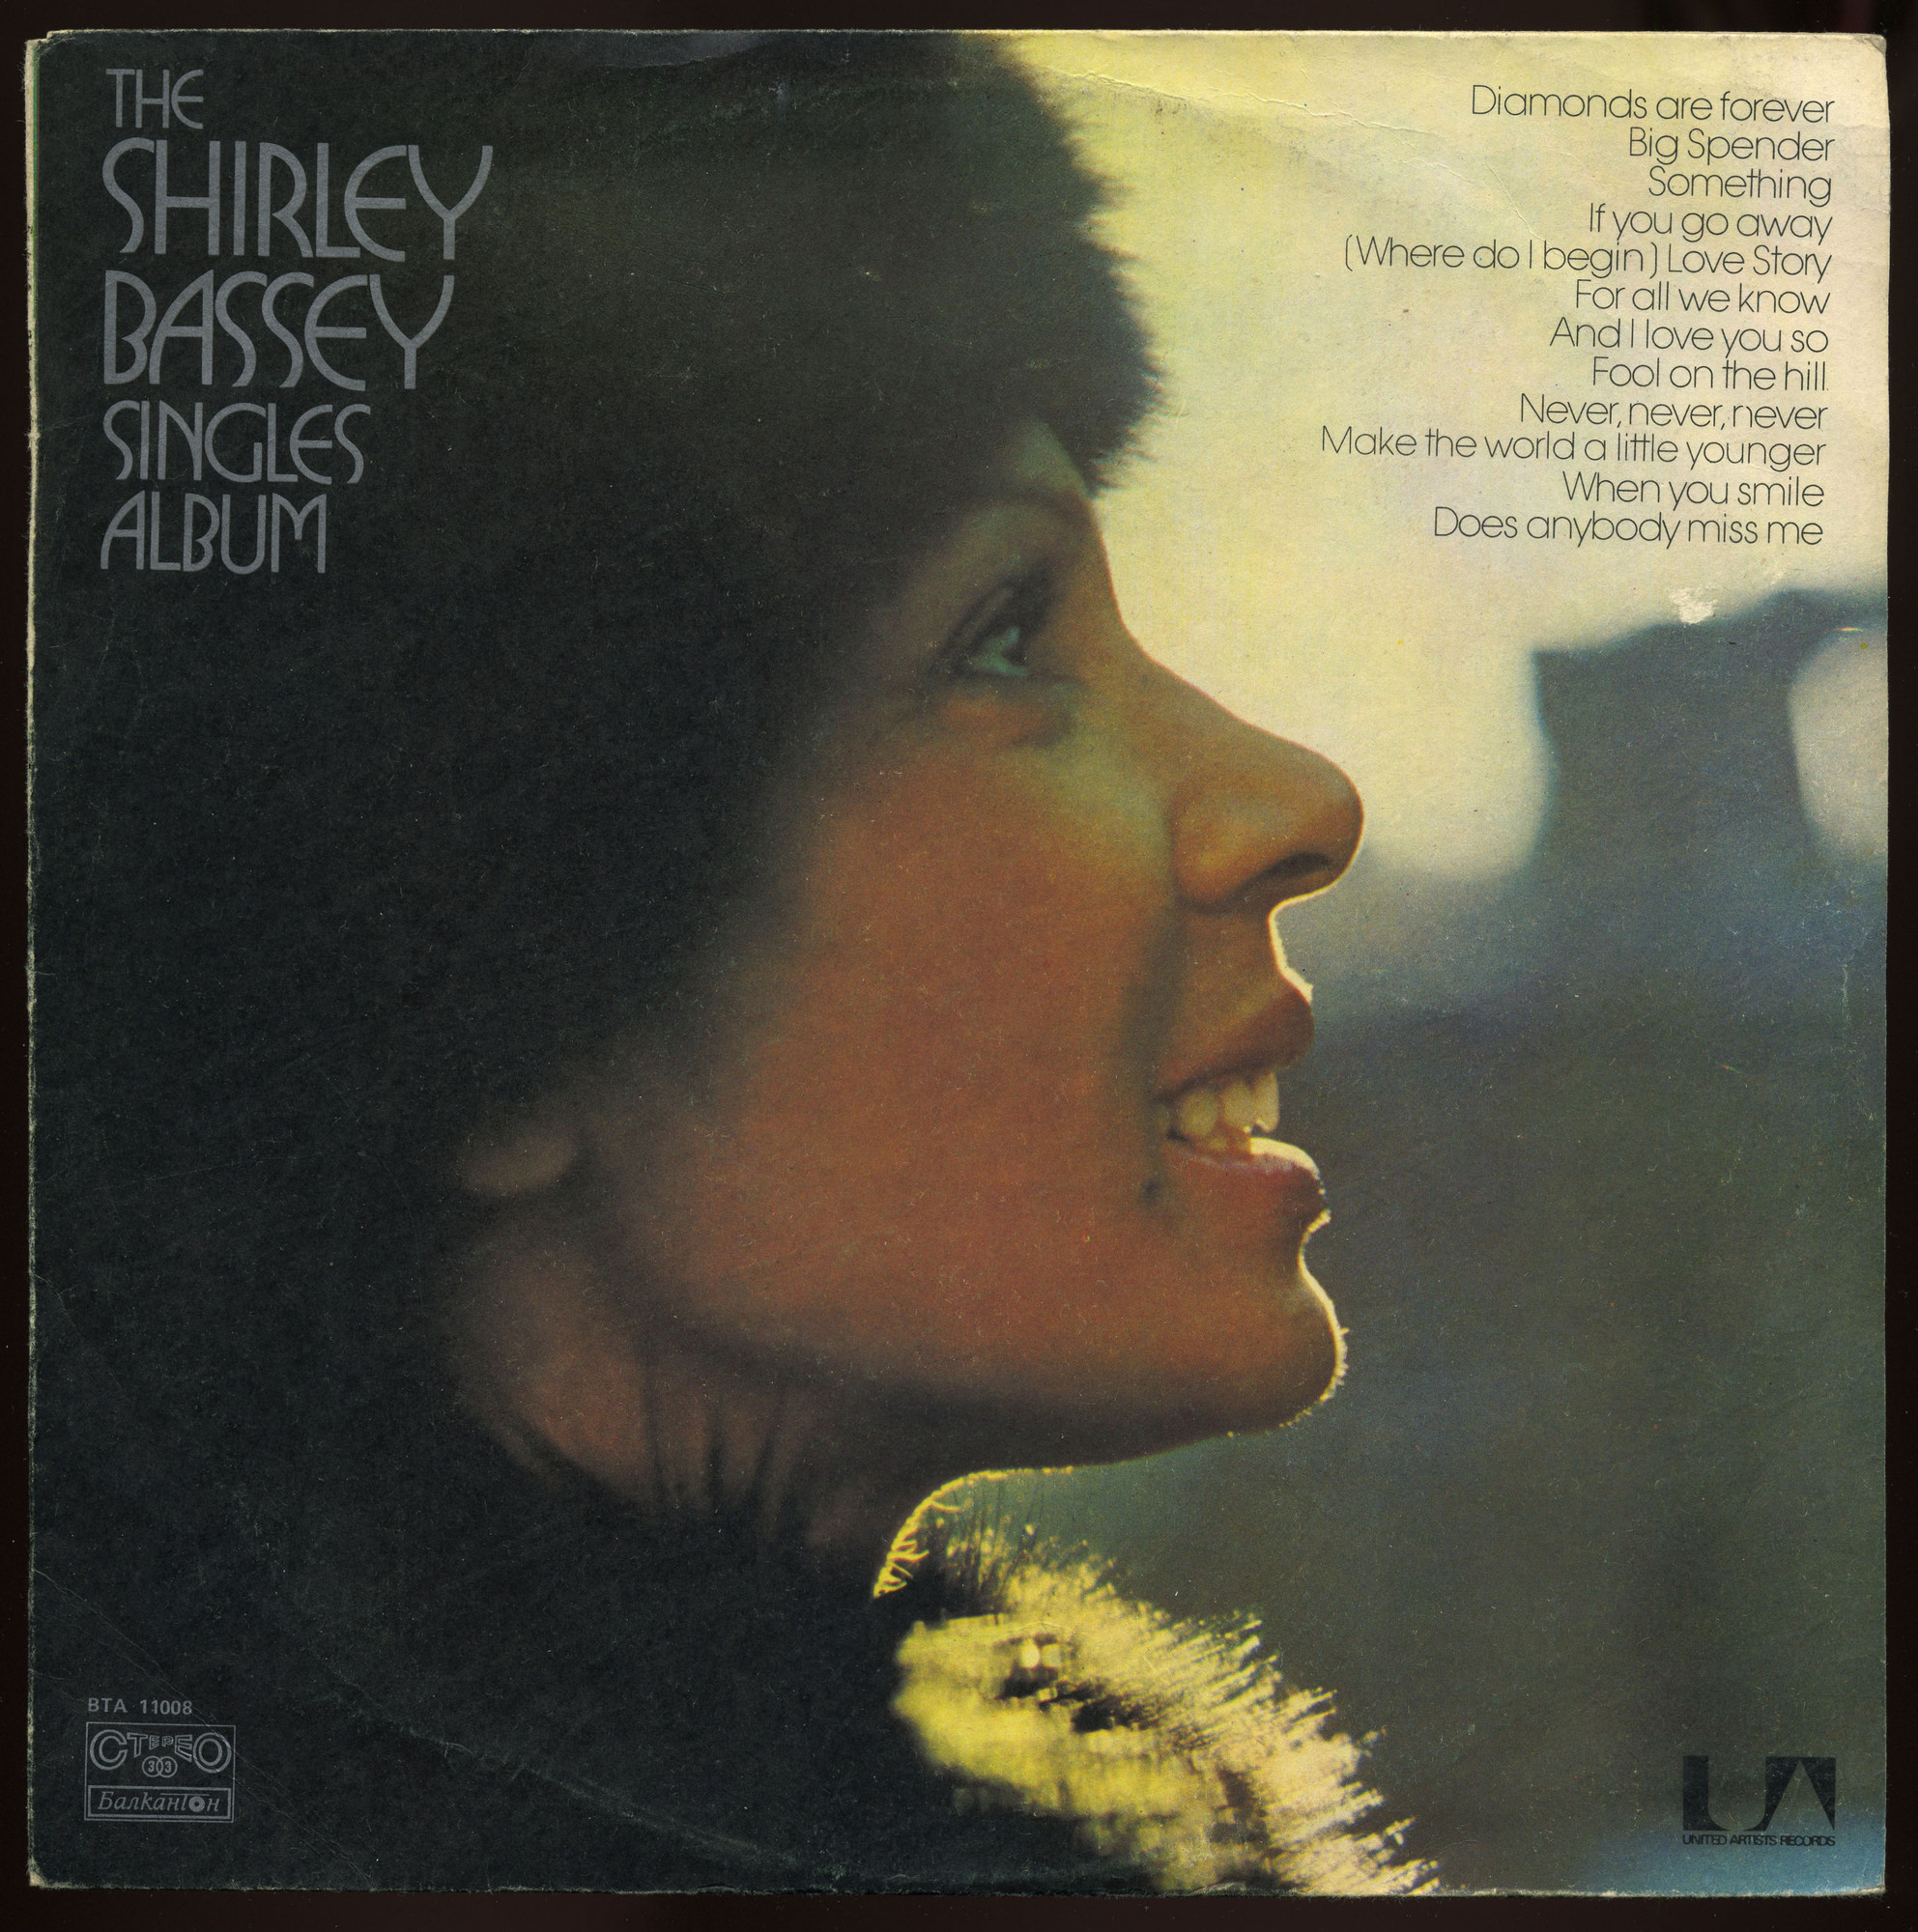 Shirley Bassey. The Shirley Bassey Singles Album